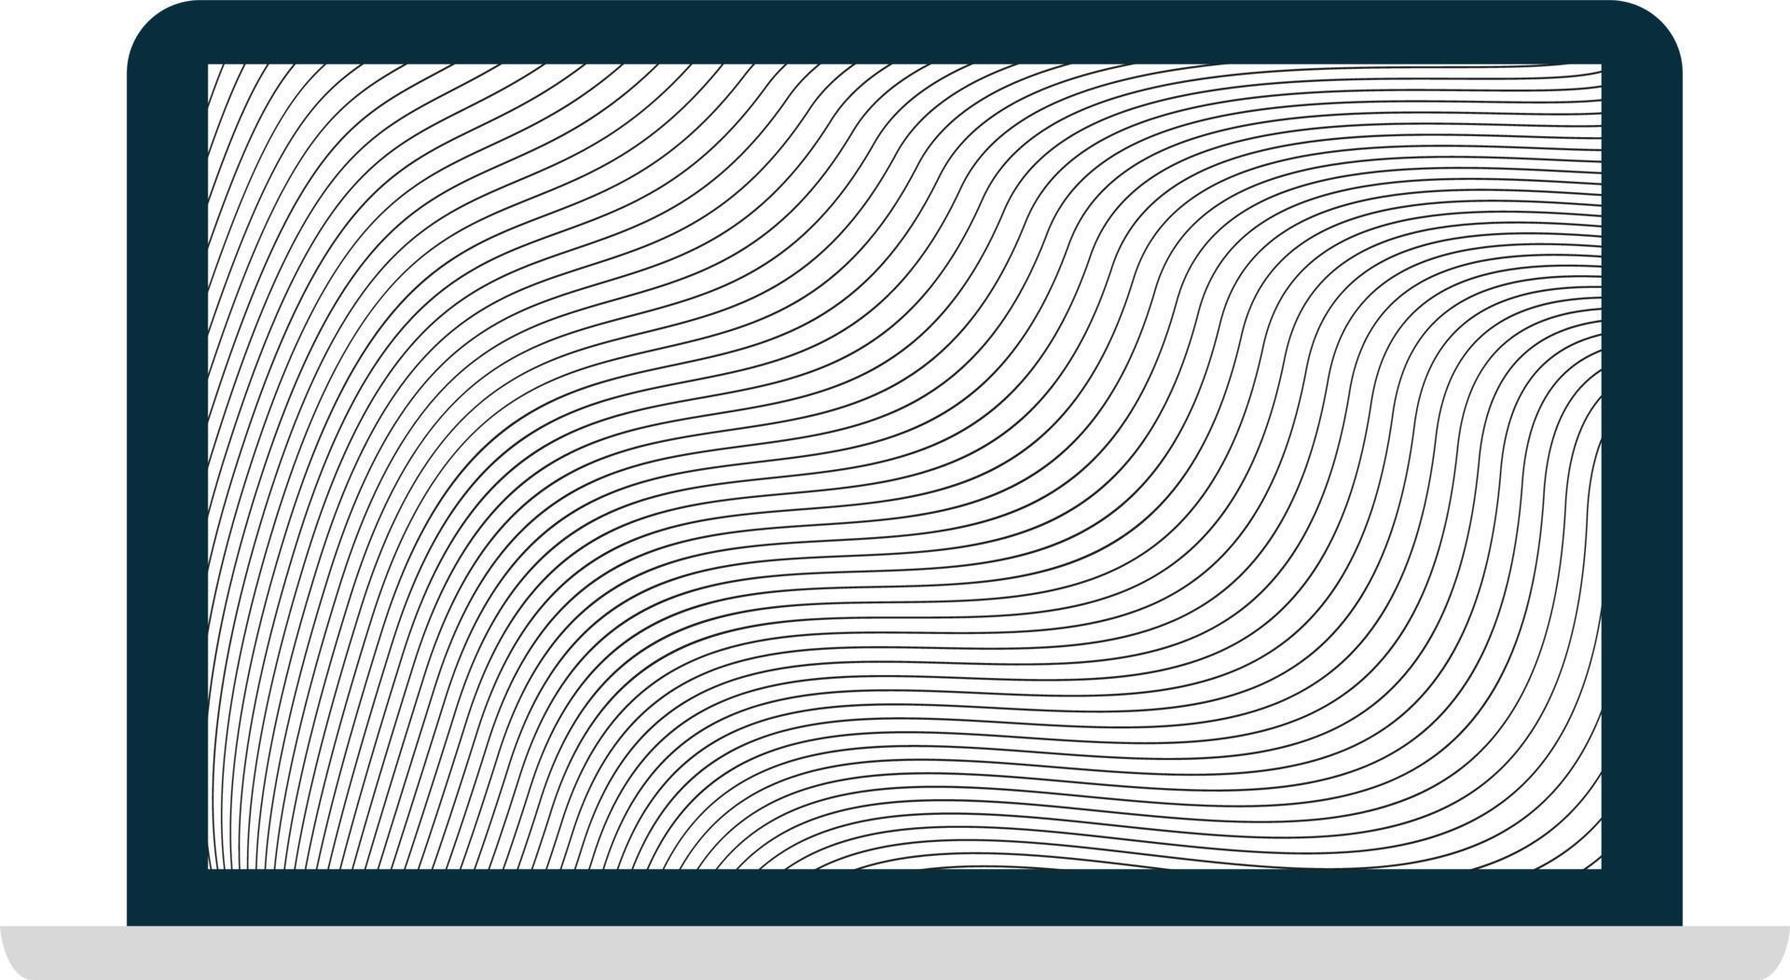 linjer abstrakt bakgrund. våg linjer mönster bakgrund vektor